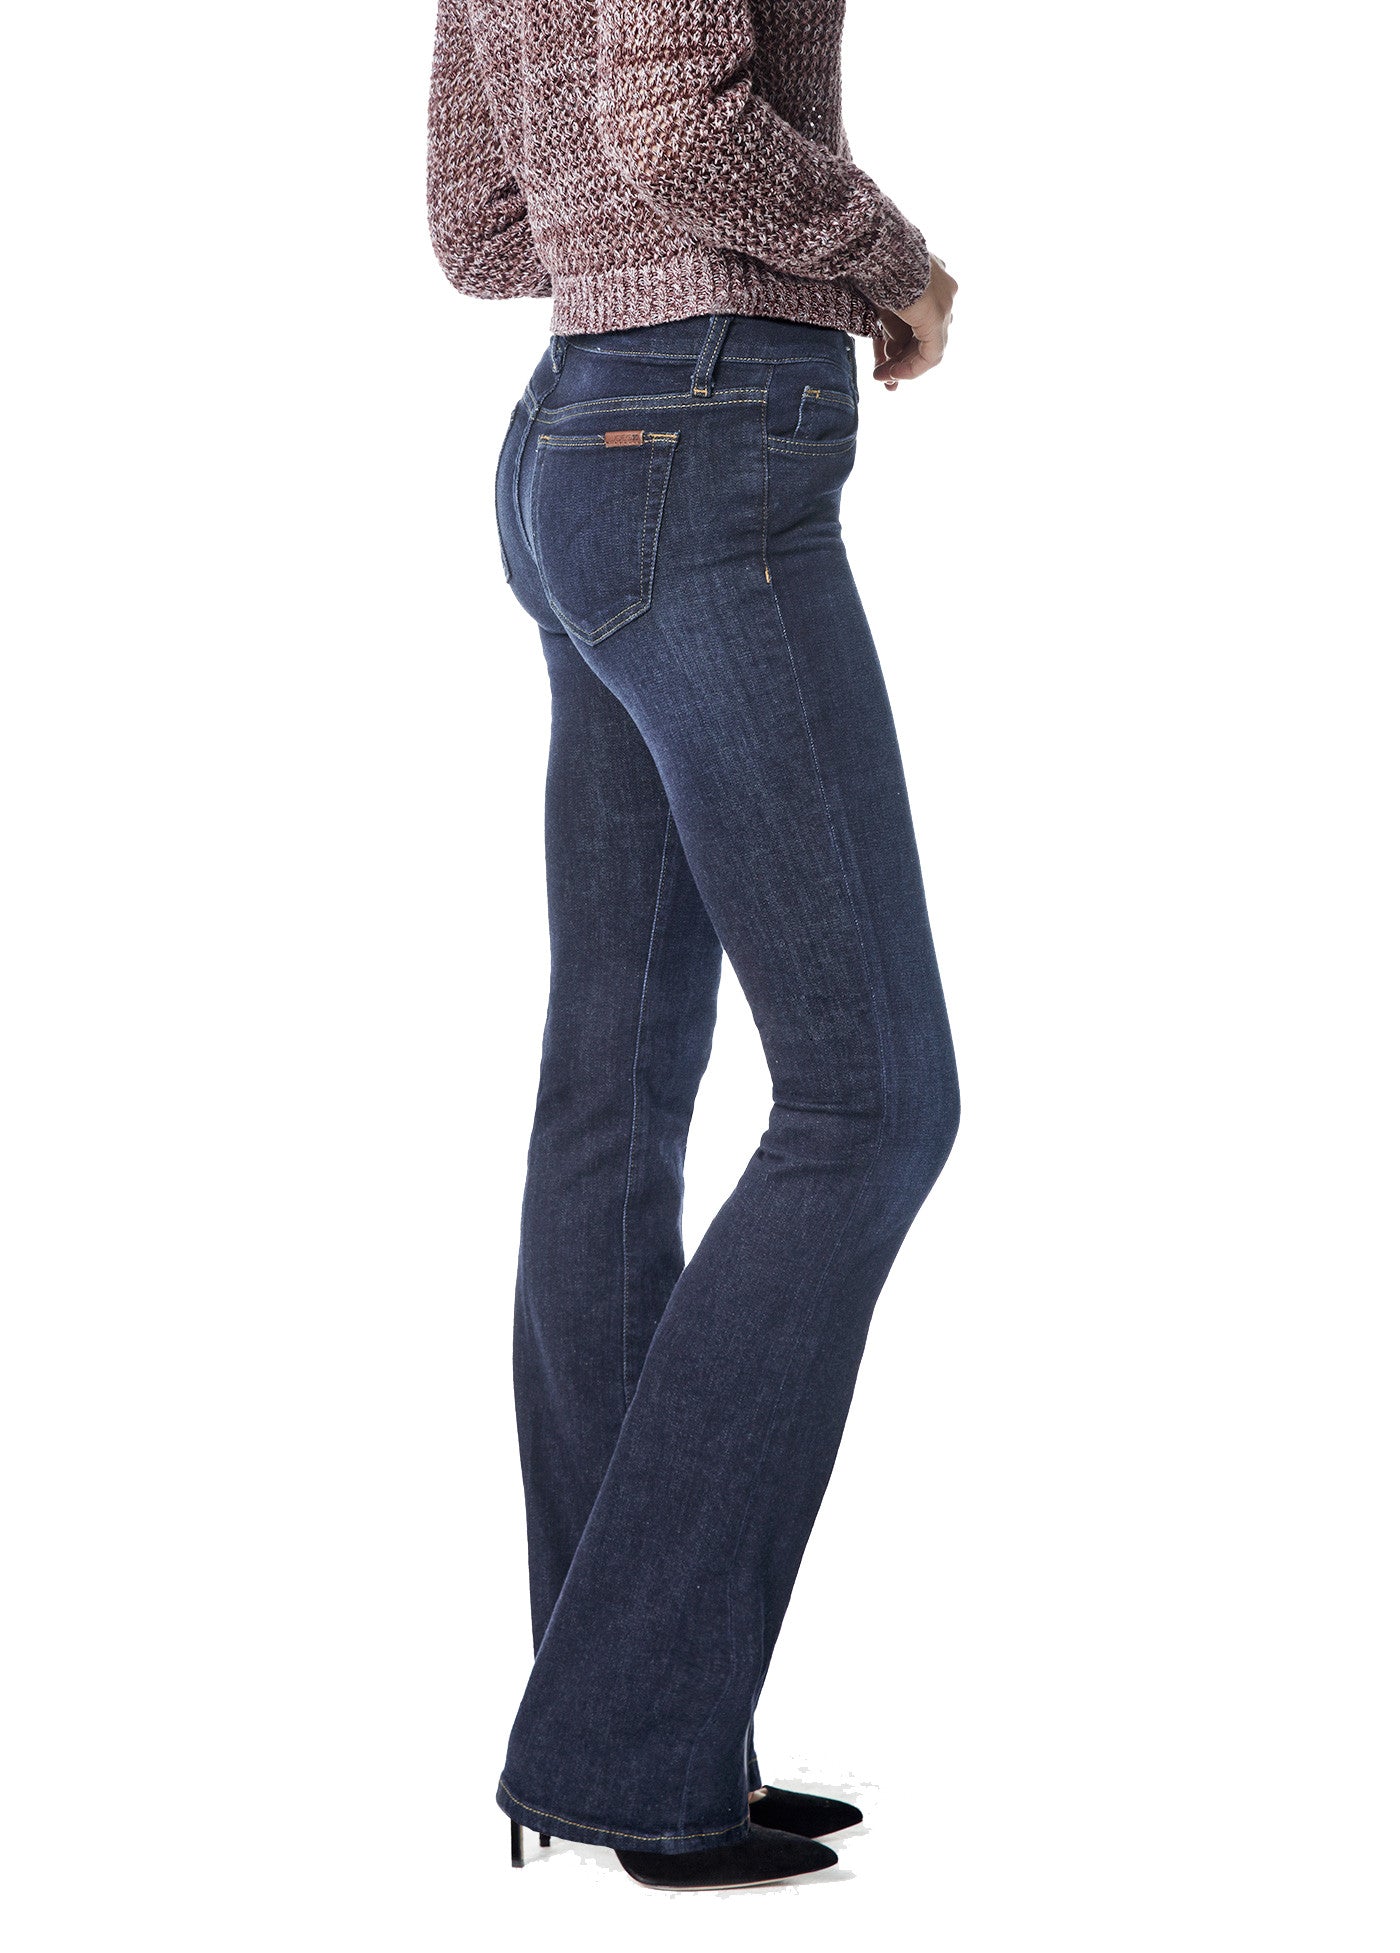 blue bootcut jeans womens